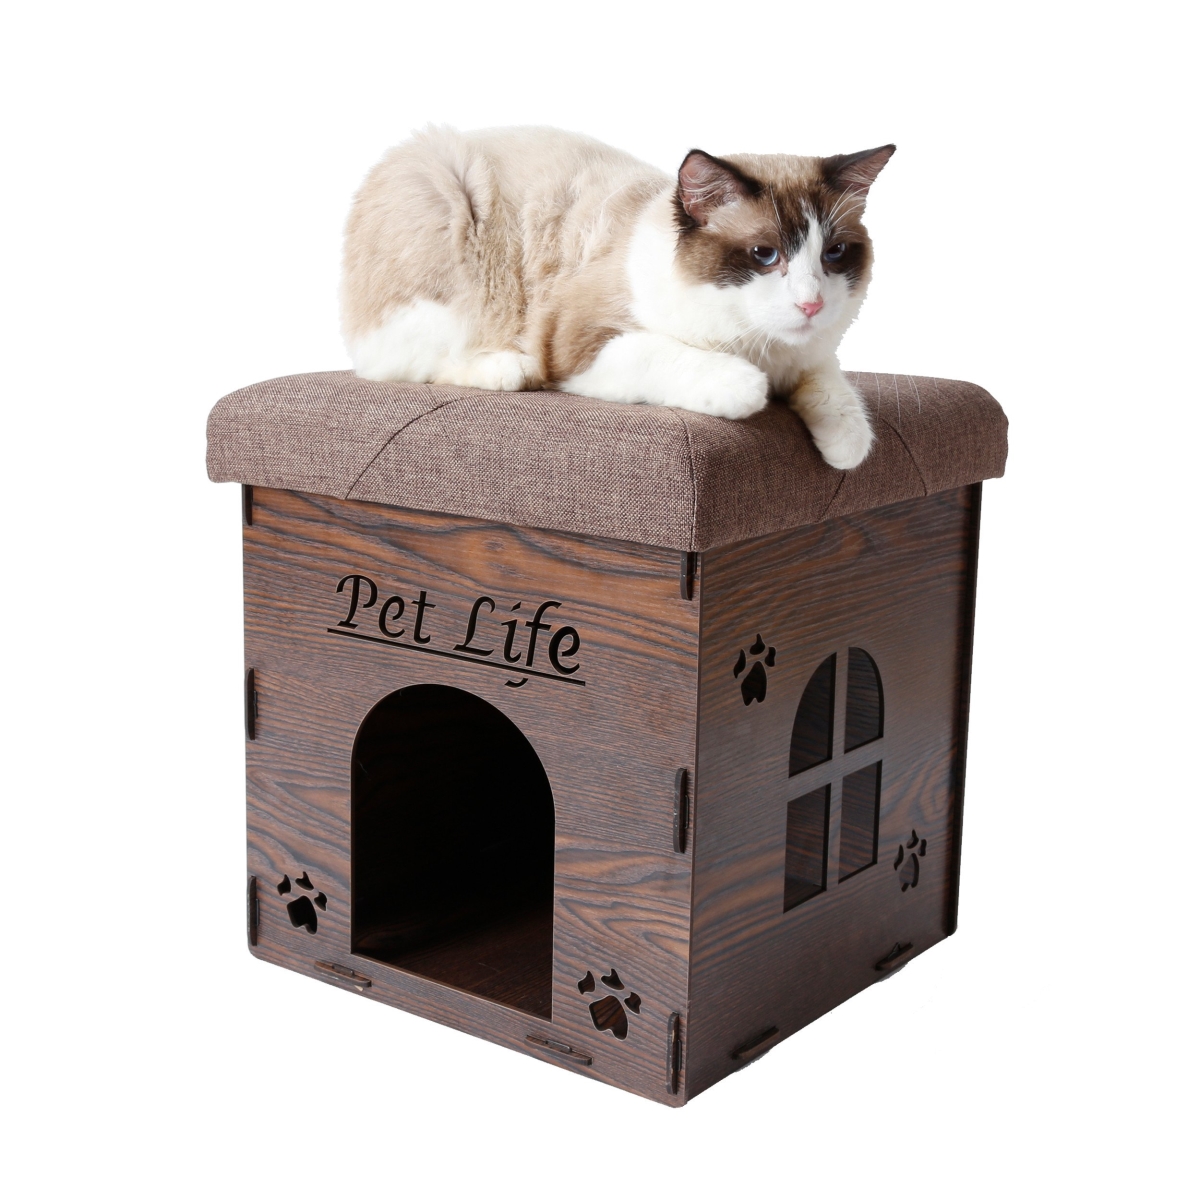 Pet Life Fn1dbrmd Foldaway Collapsible Designer Cat House Furniture Bench, Dark Wood - One Size